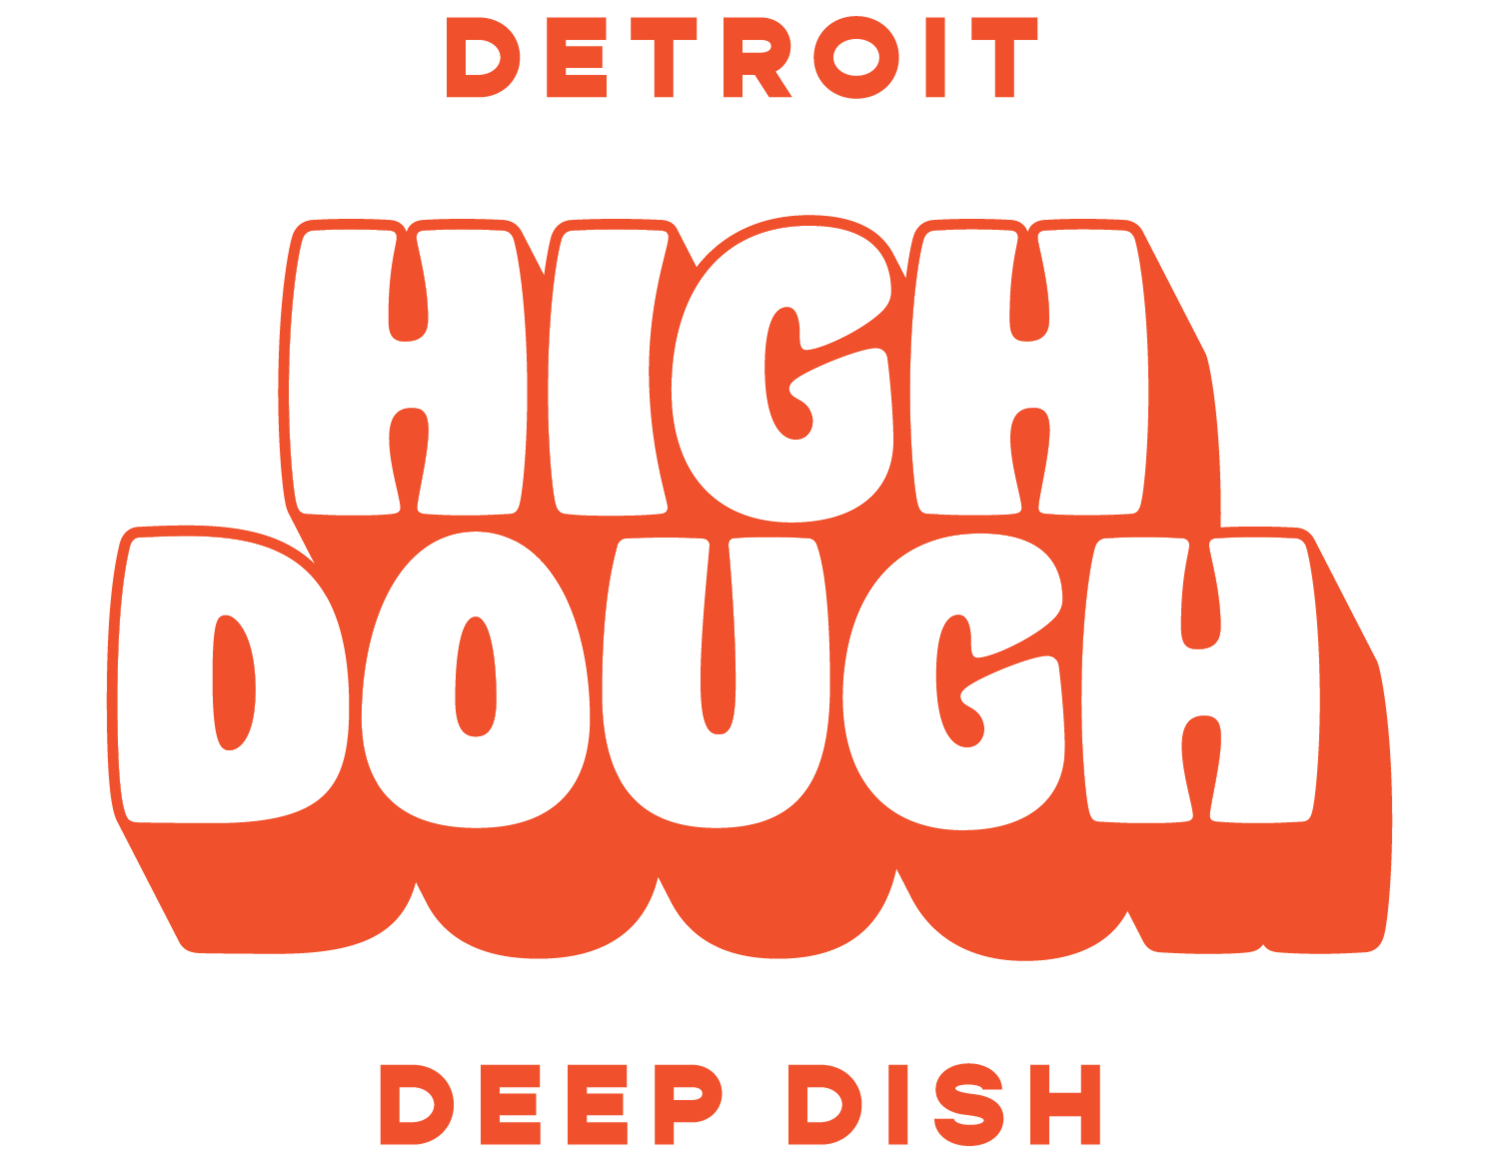 High Dough